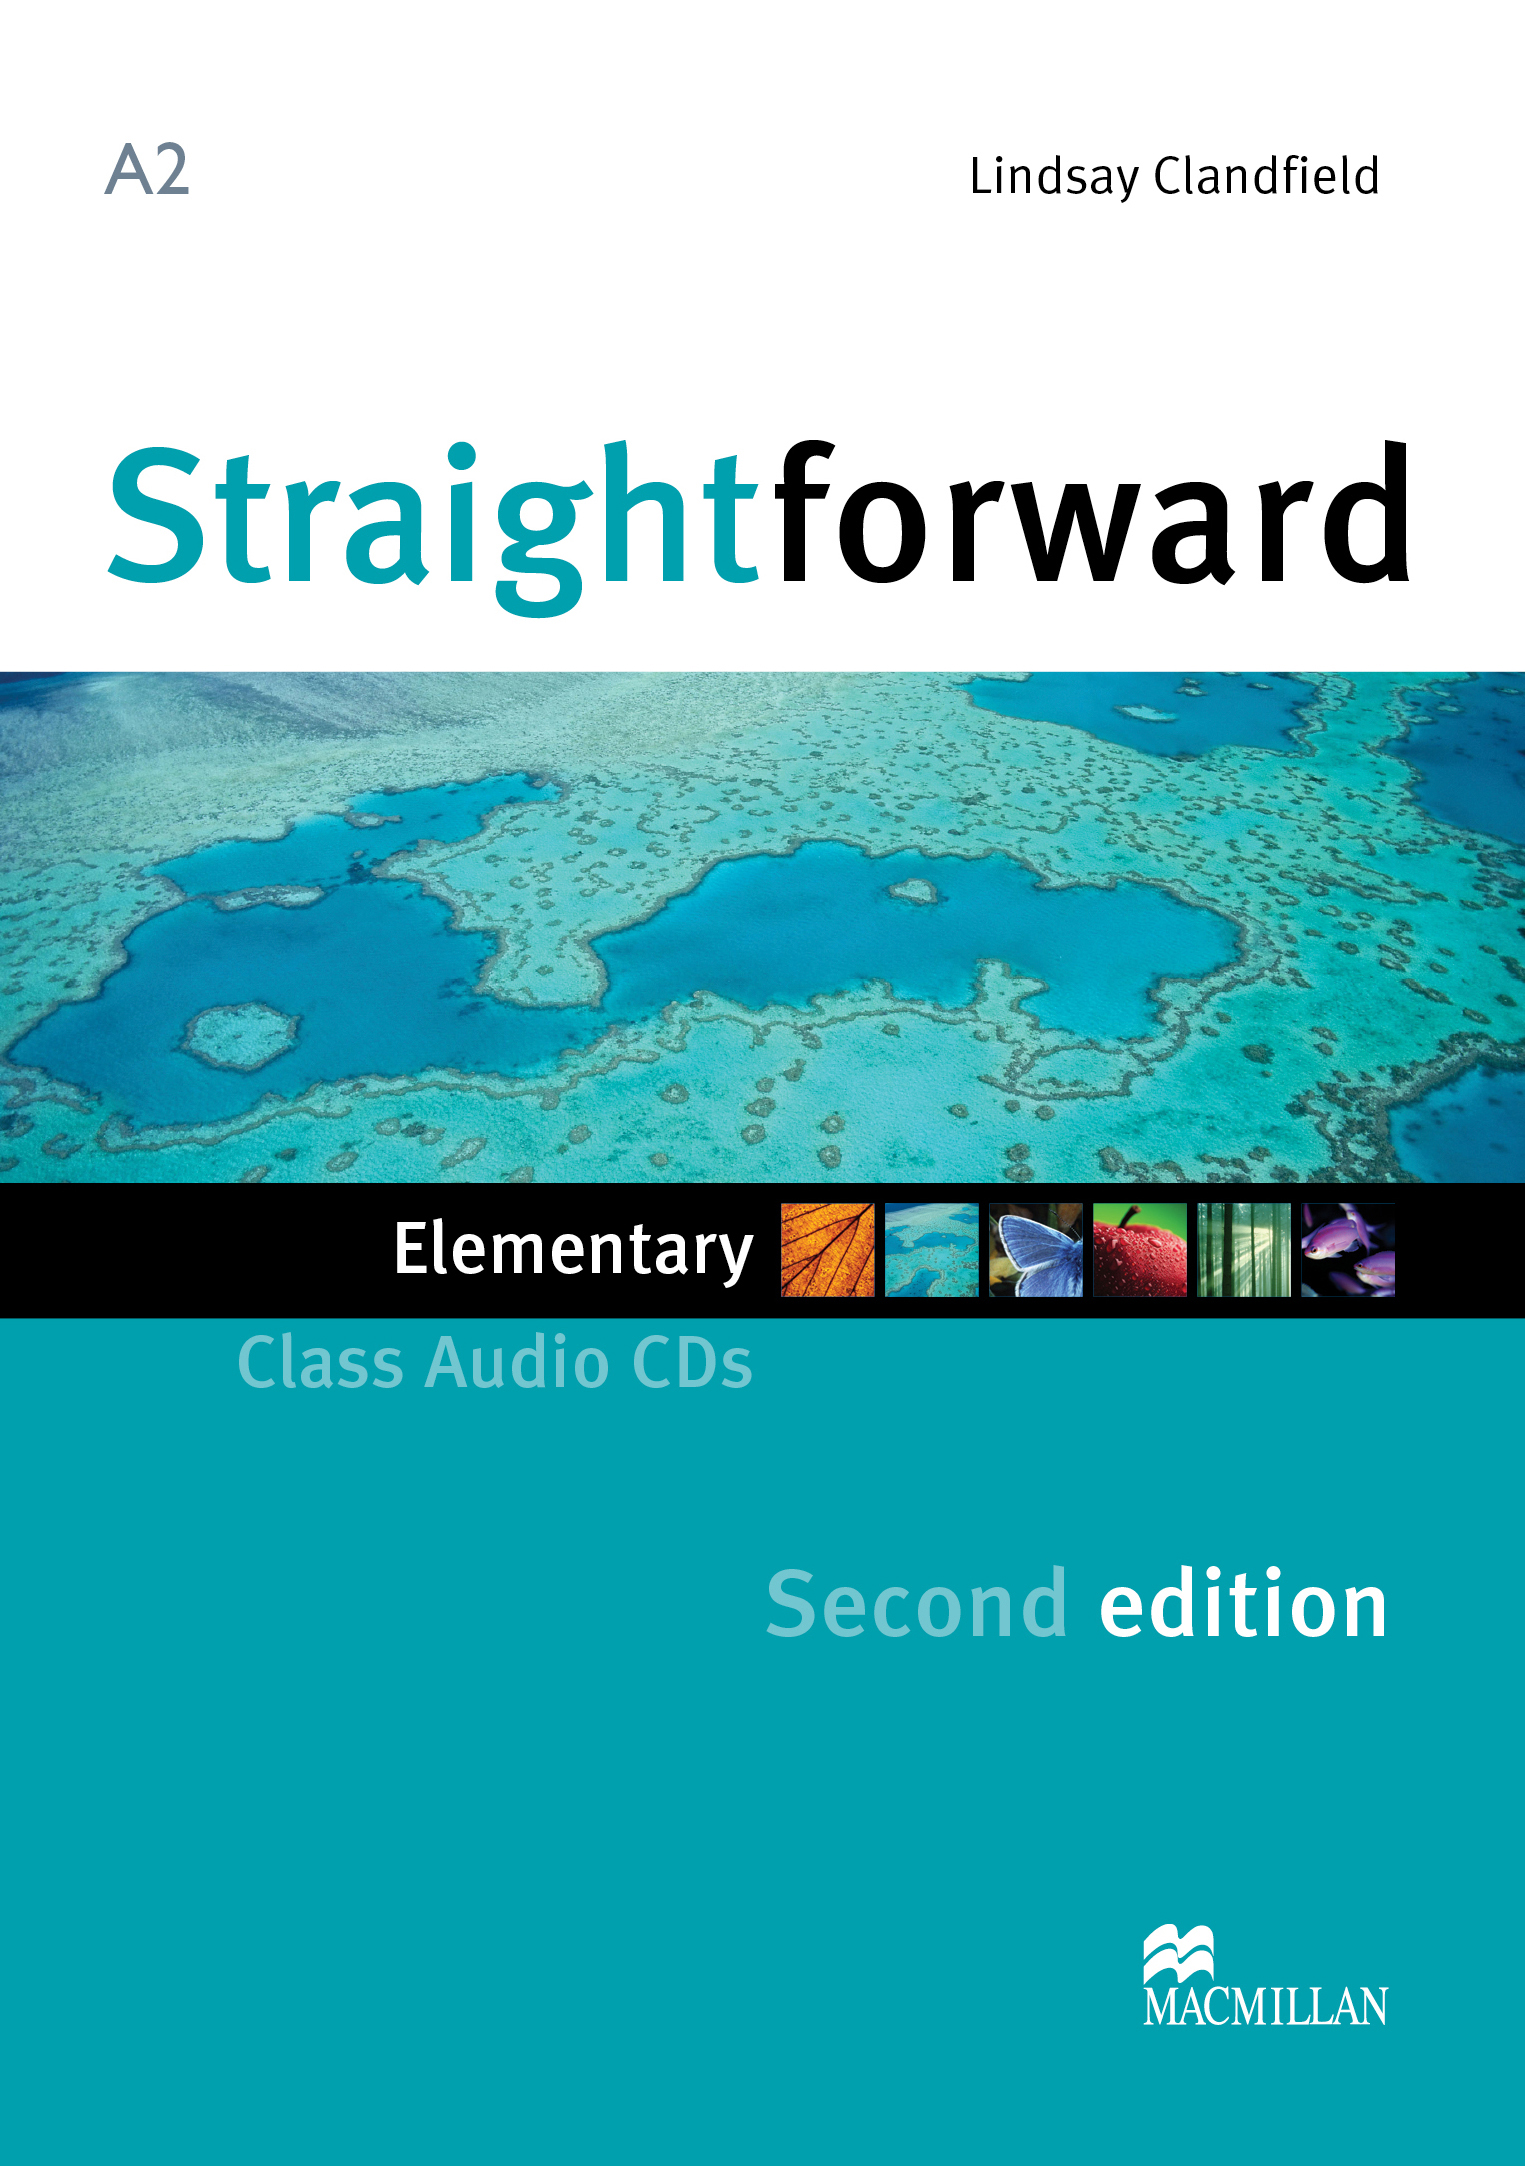 Straightforward (Second Edition) Elementary Class Audio CDs / Аудиодиски